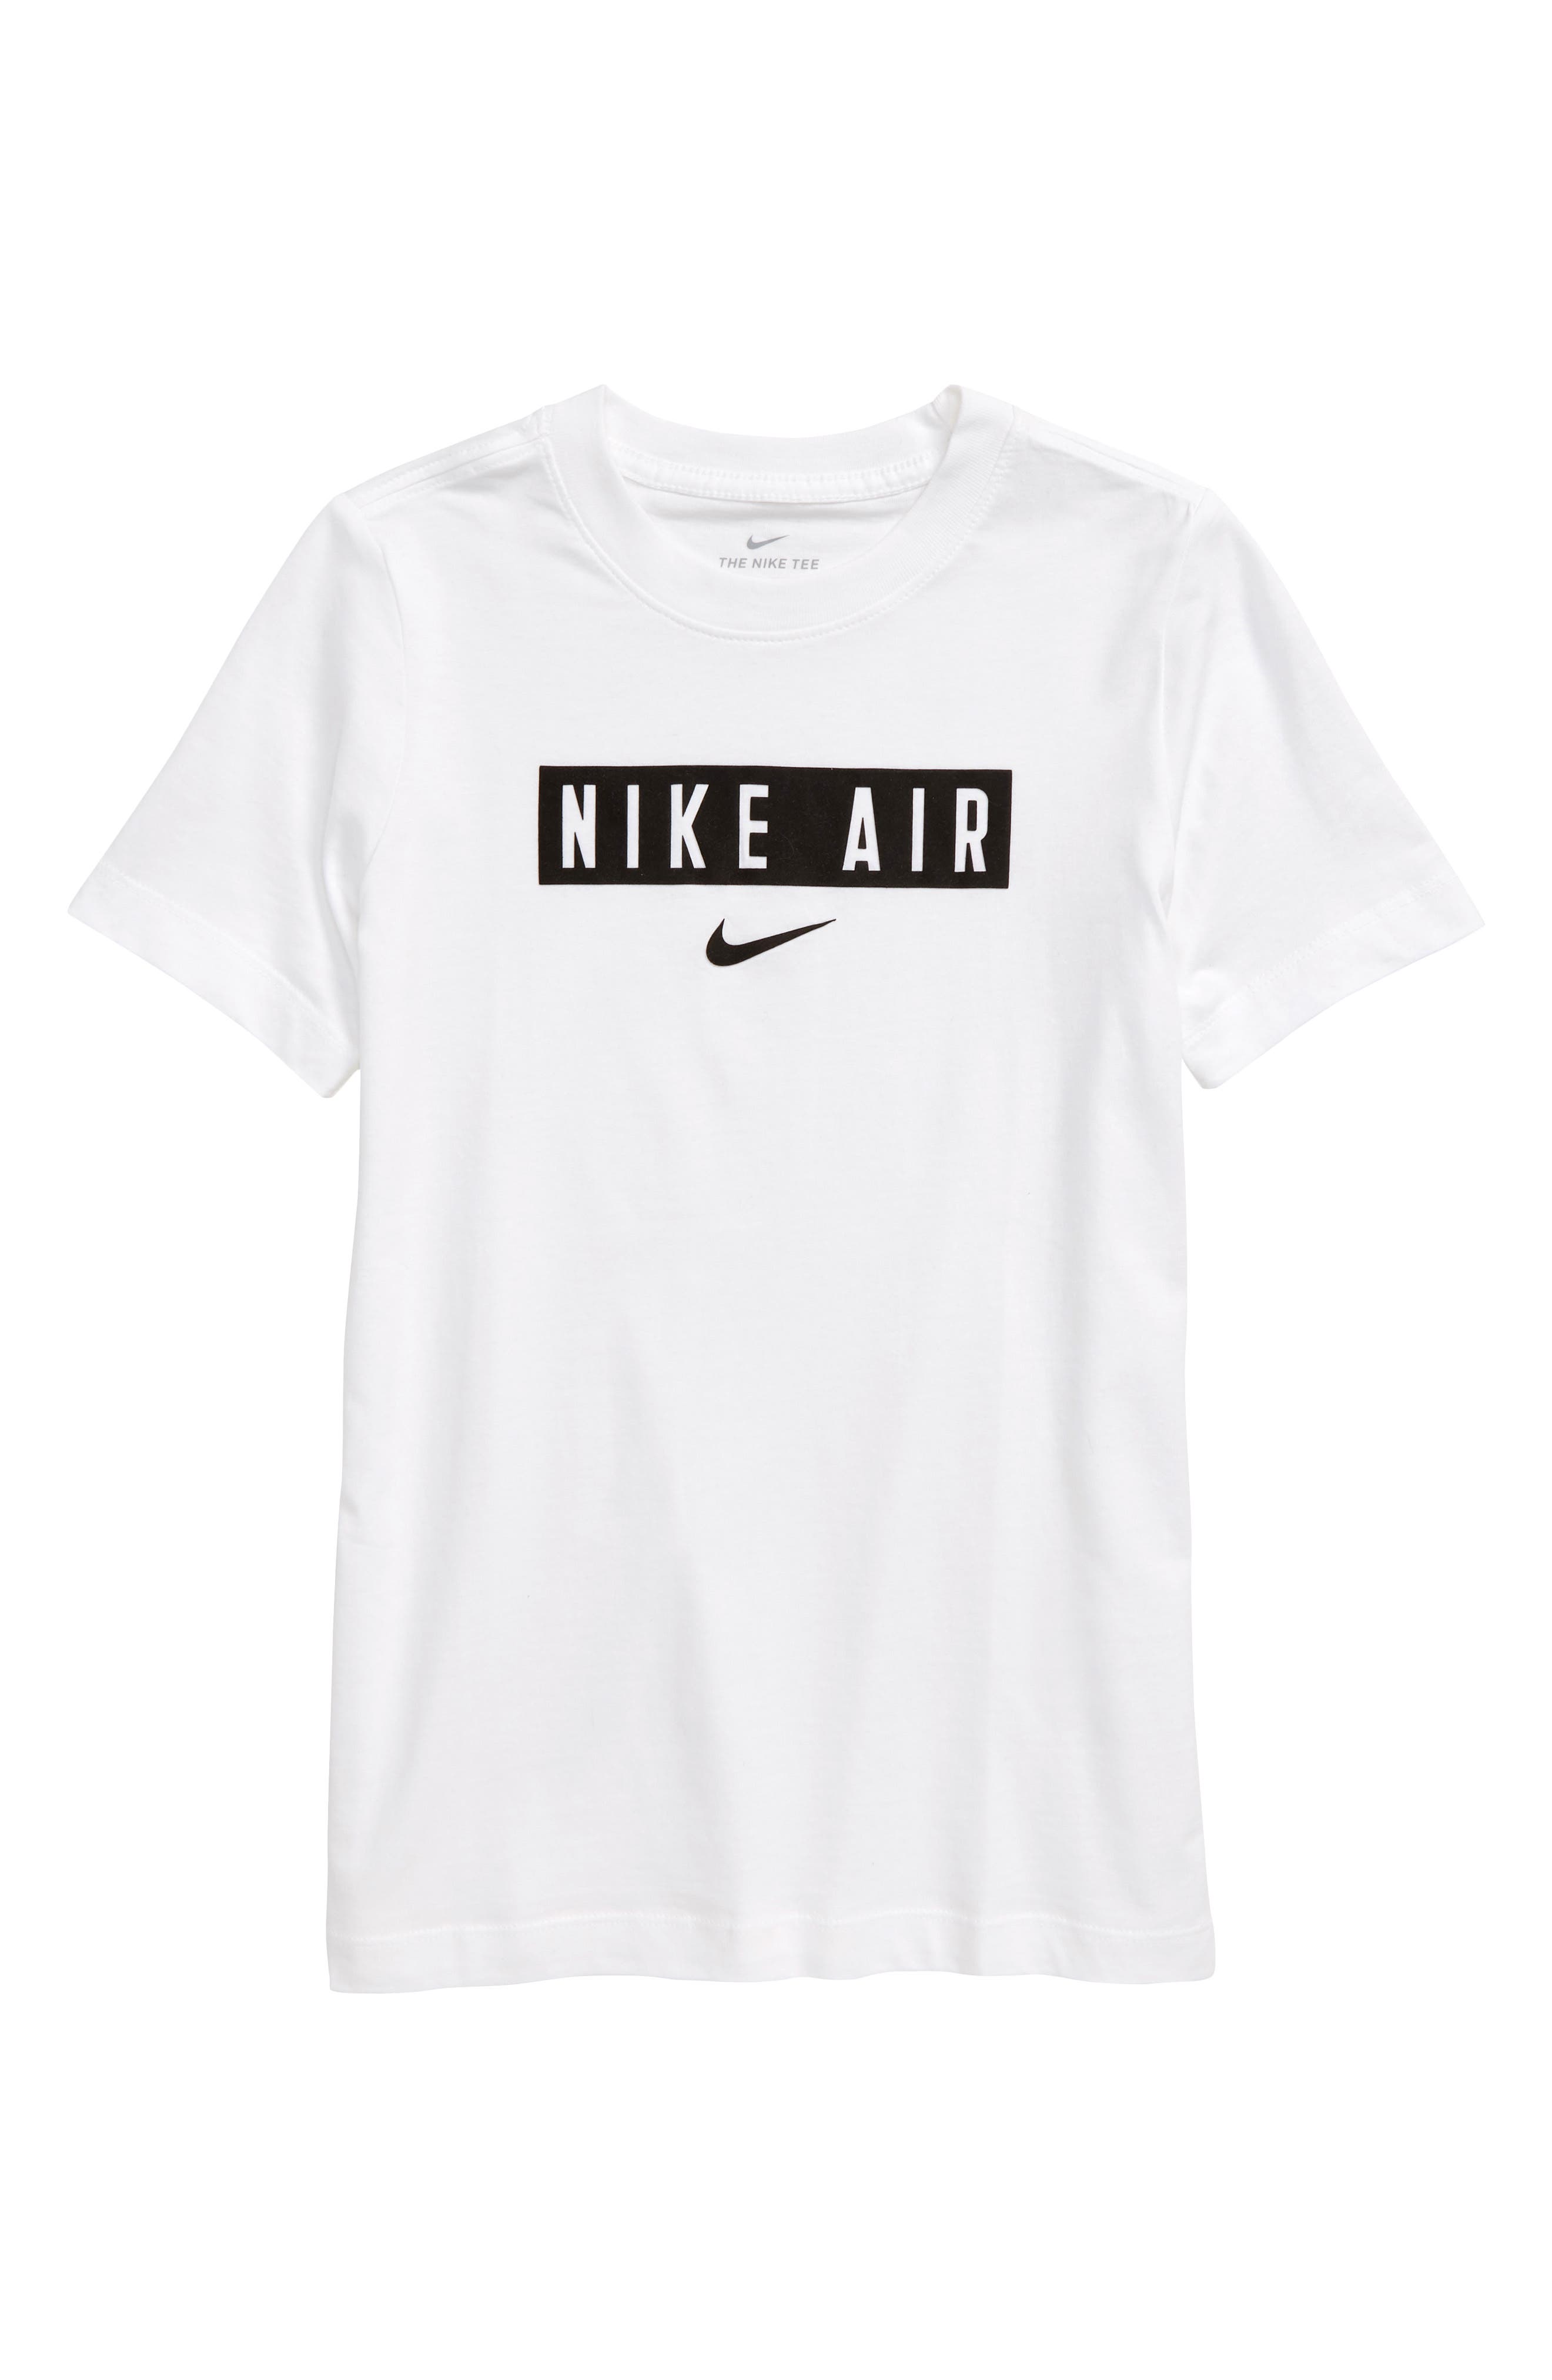 nike air box t shirt